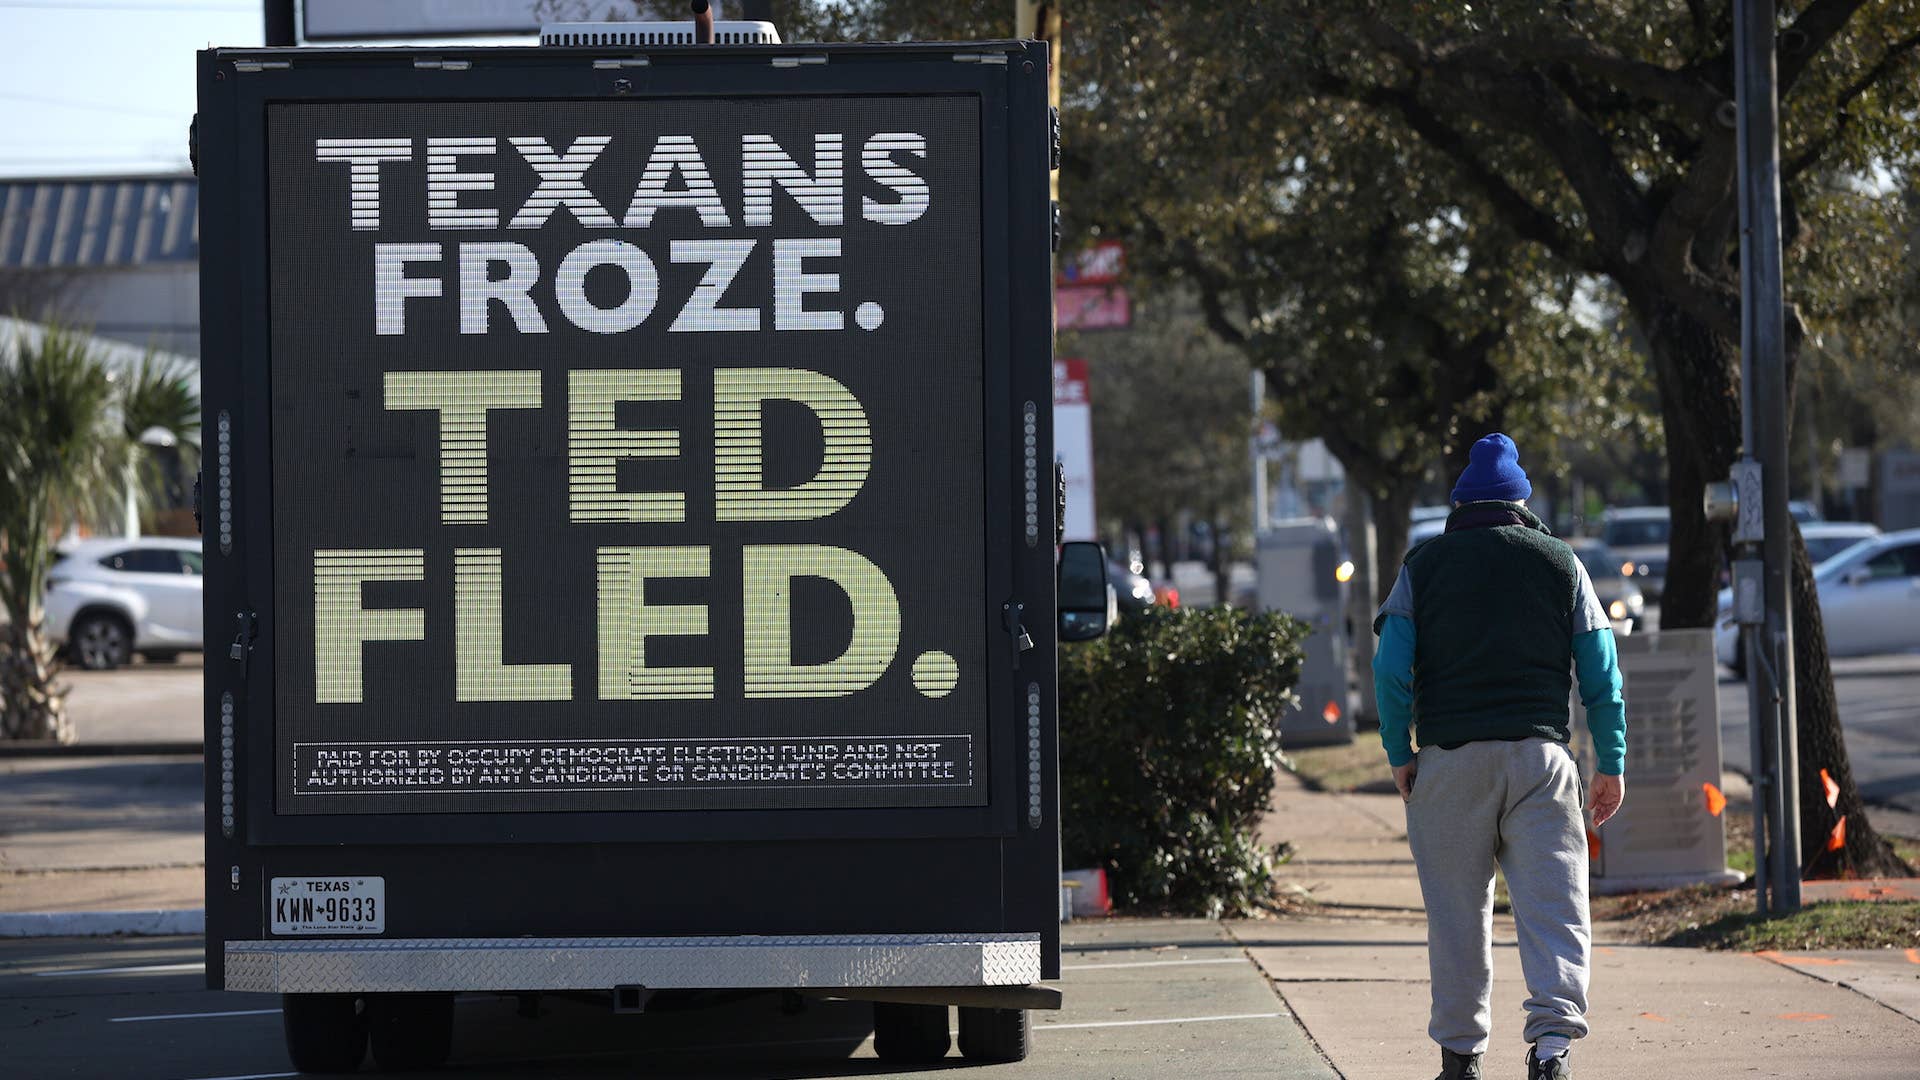 A pedestrian walks by a digital billboard truck with an image of U.S. Sen. Ted Cruz